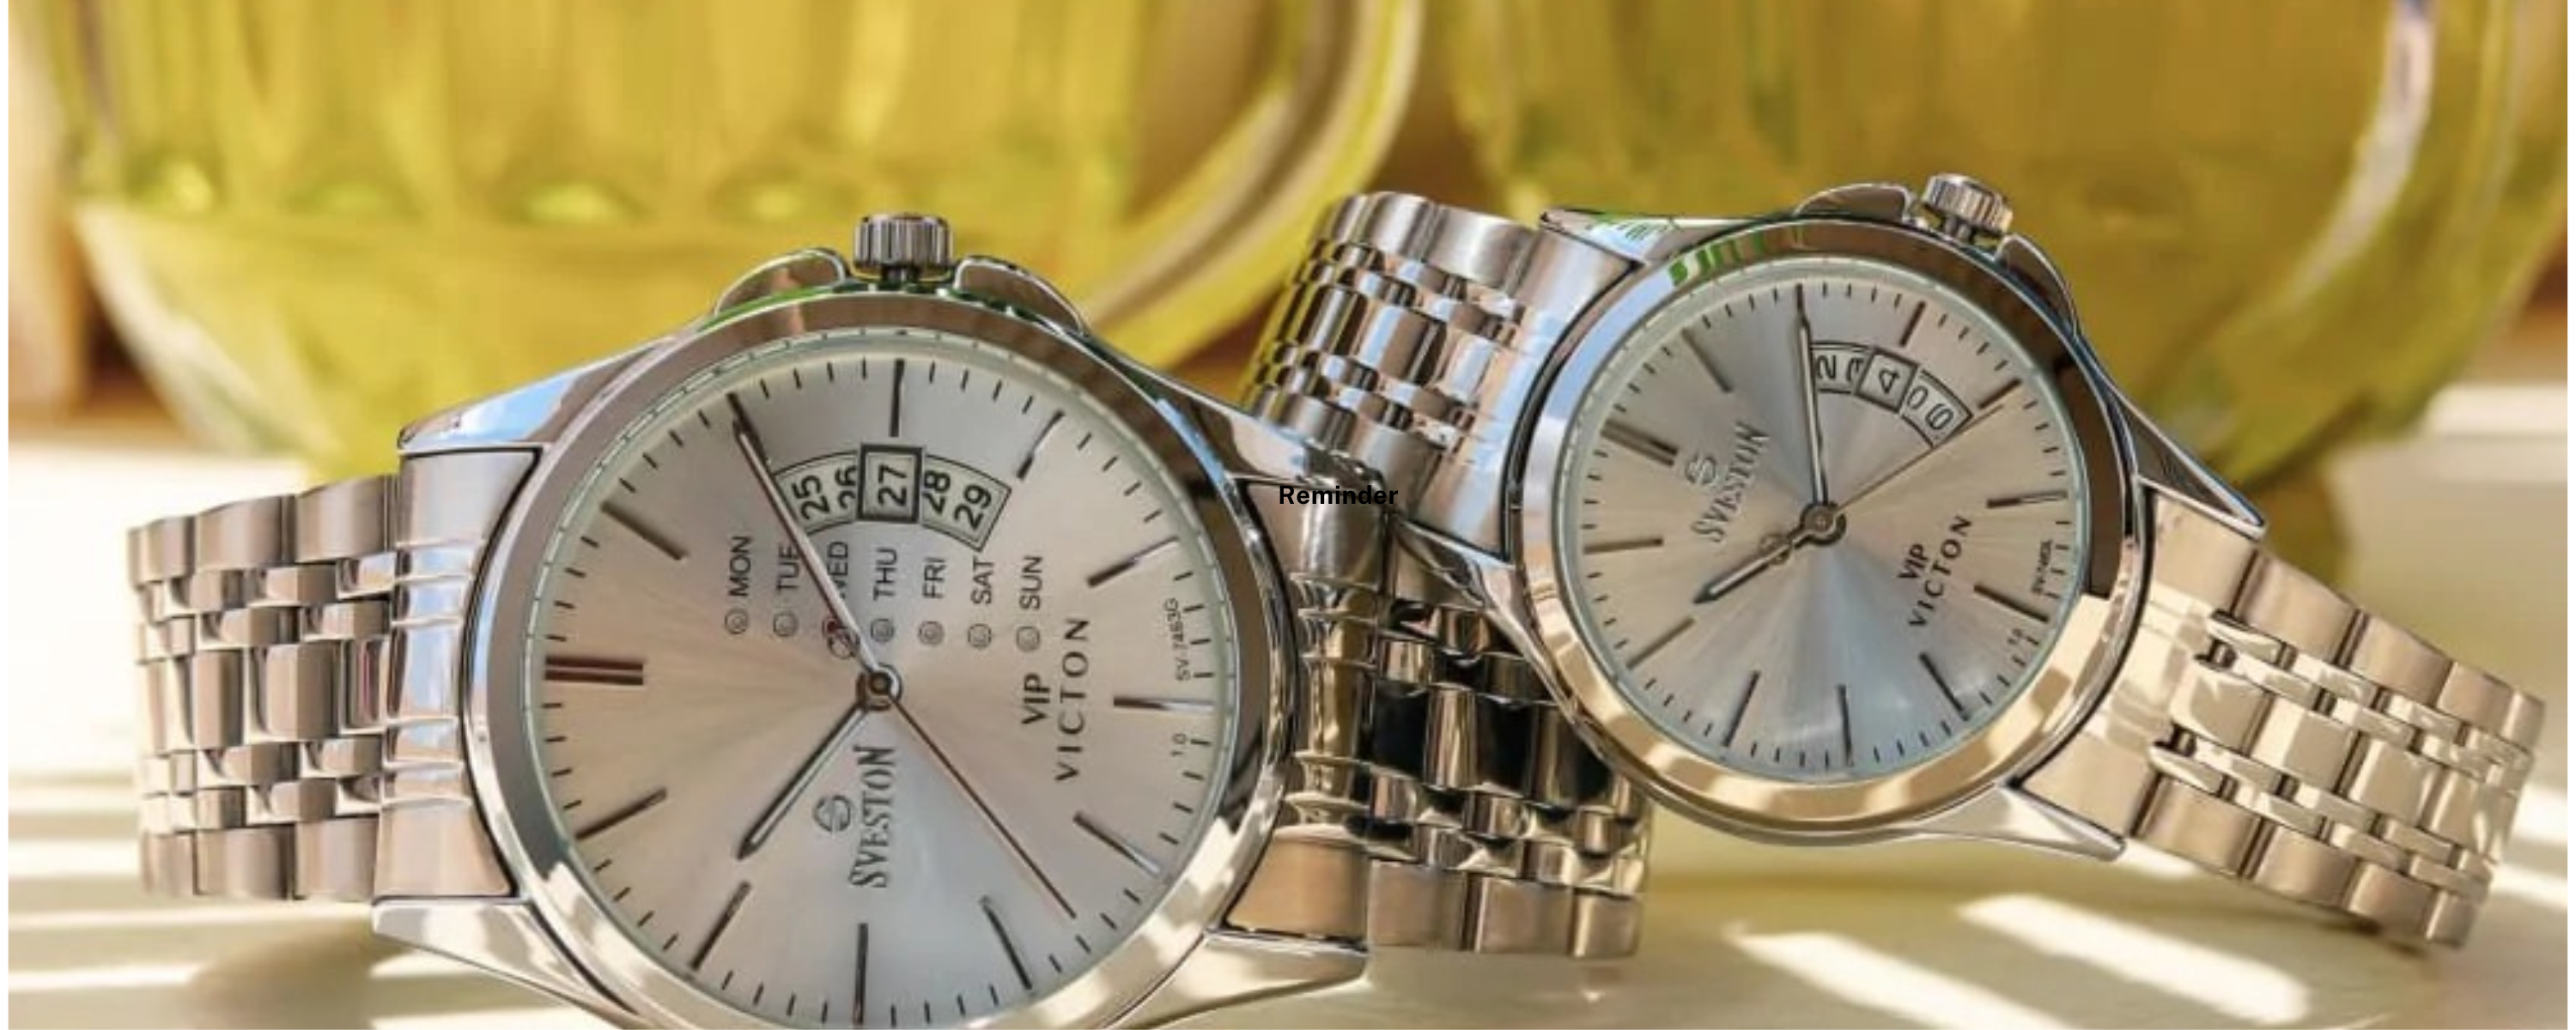 Sveston Couple timepieces under 10,000 PKR